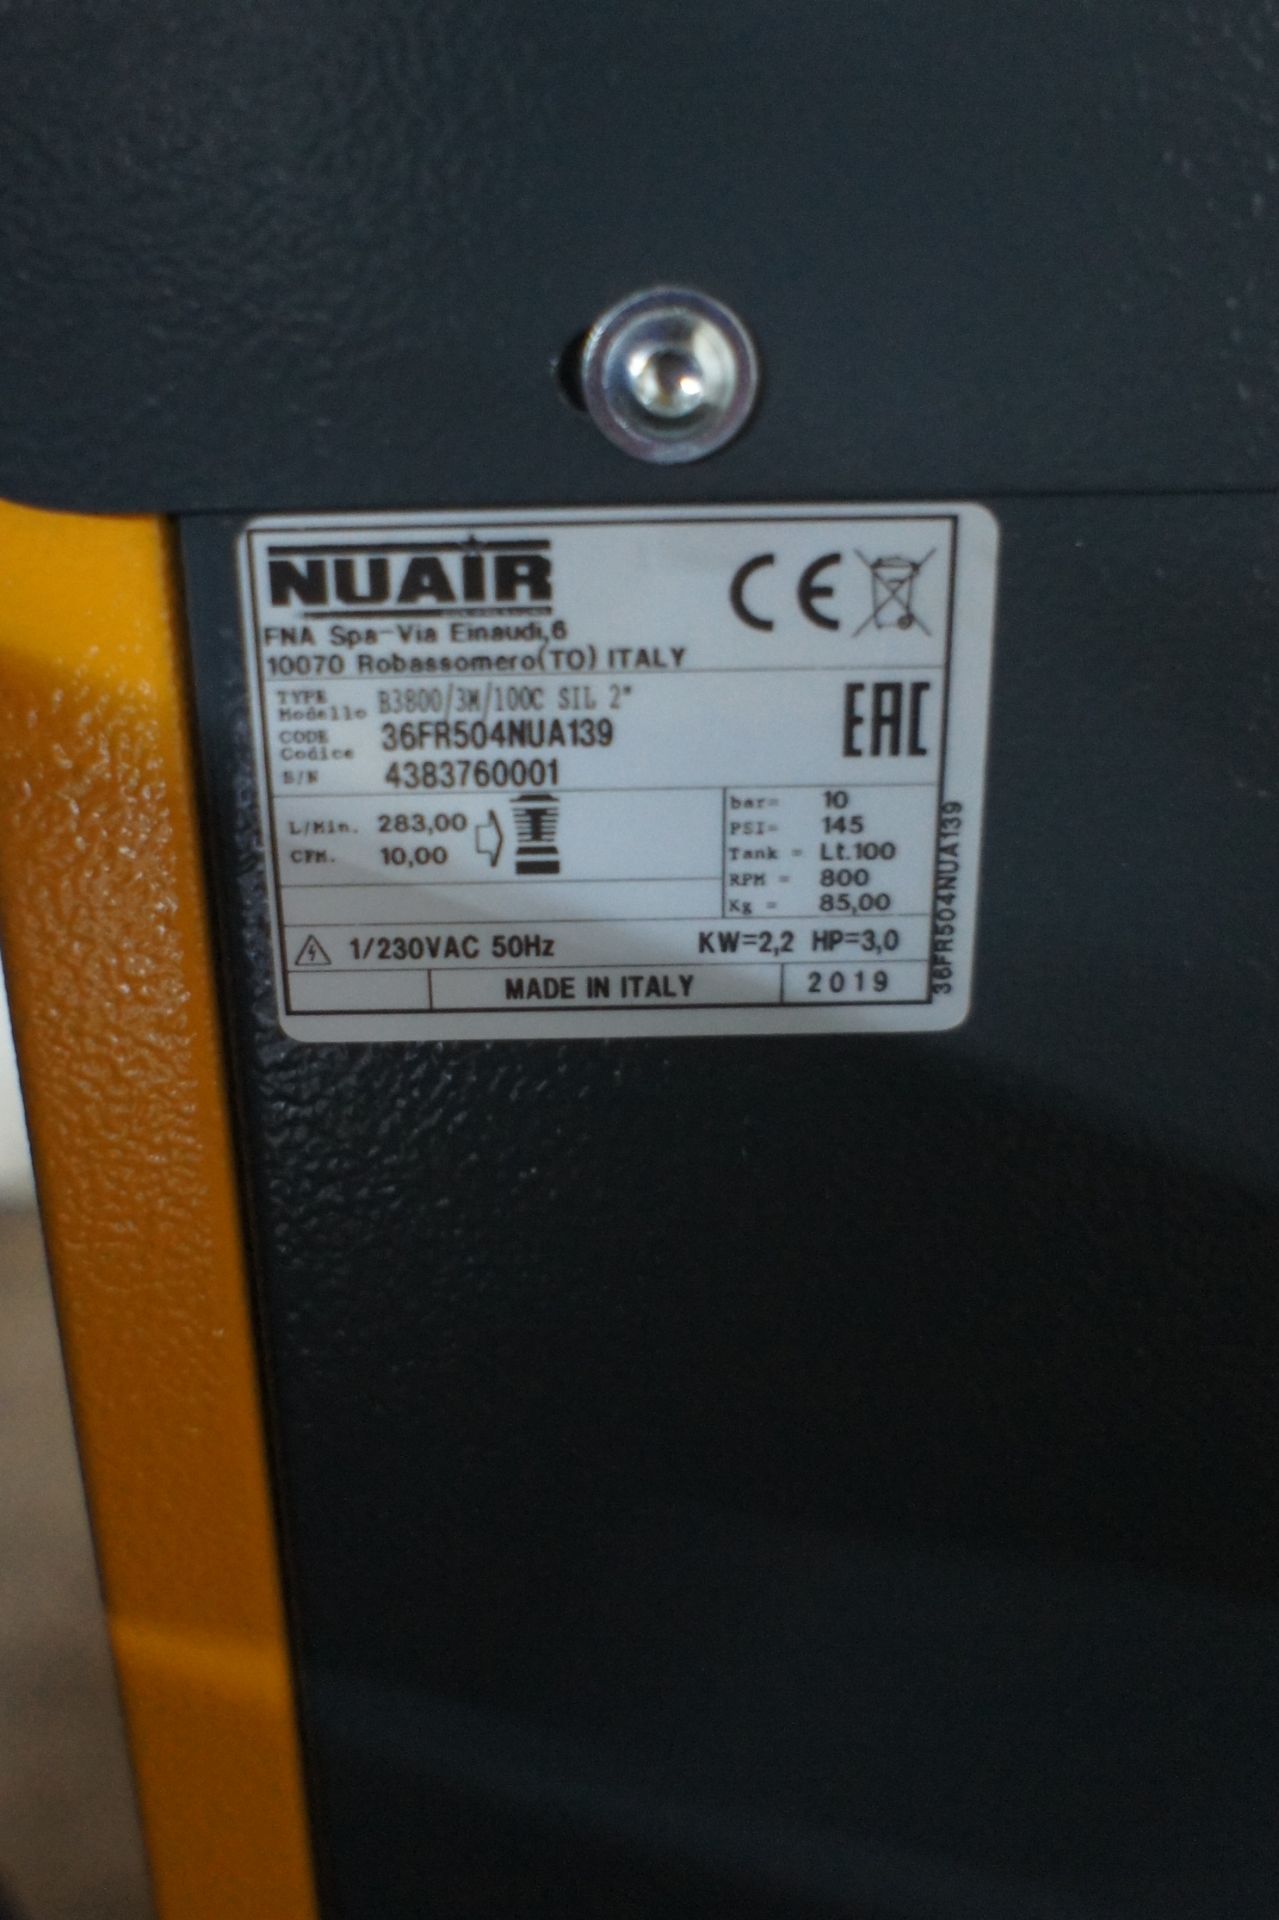 Nuair B3800/3U/100G workshop compressor, year 2019 - Image 4 of 4